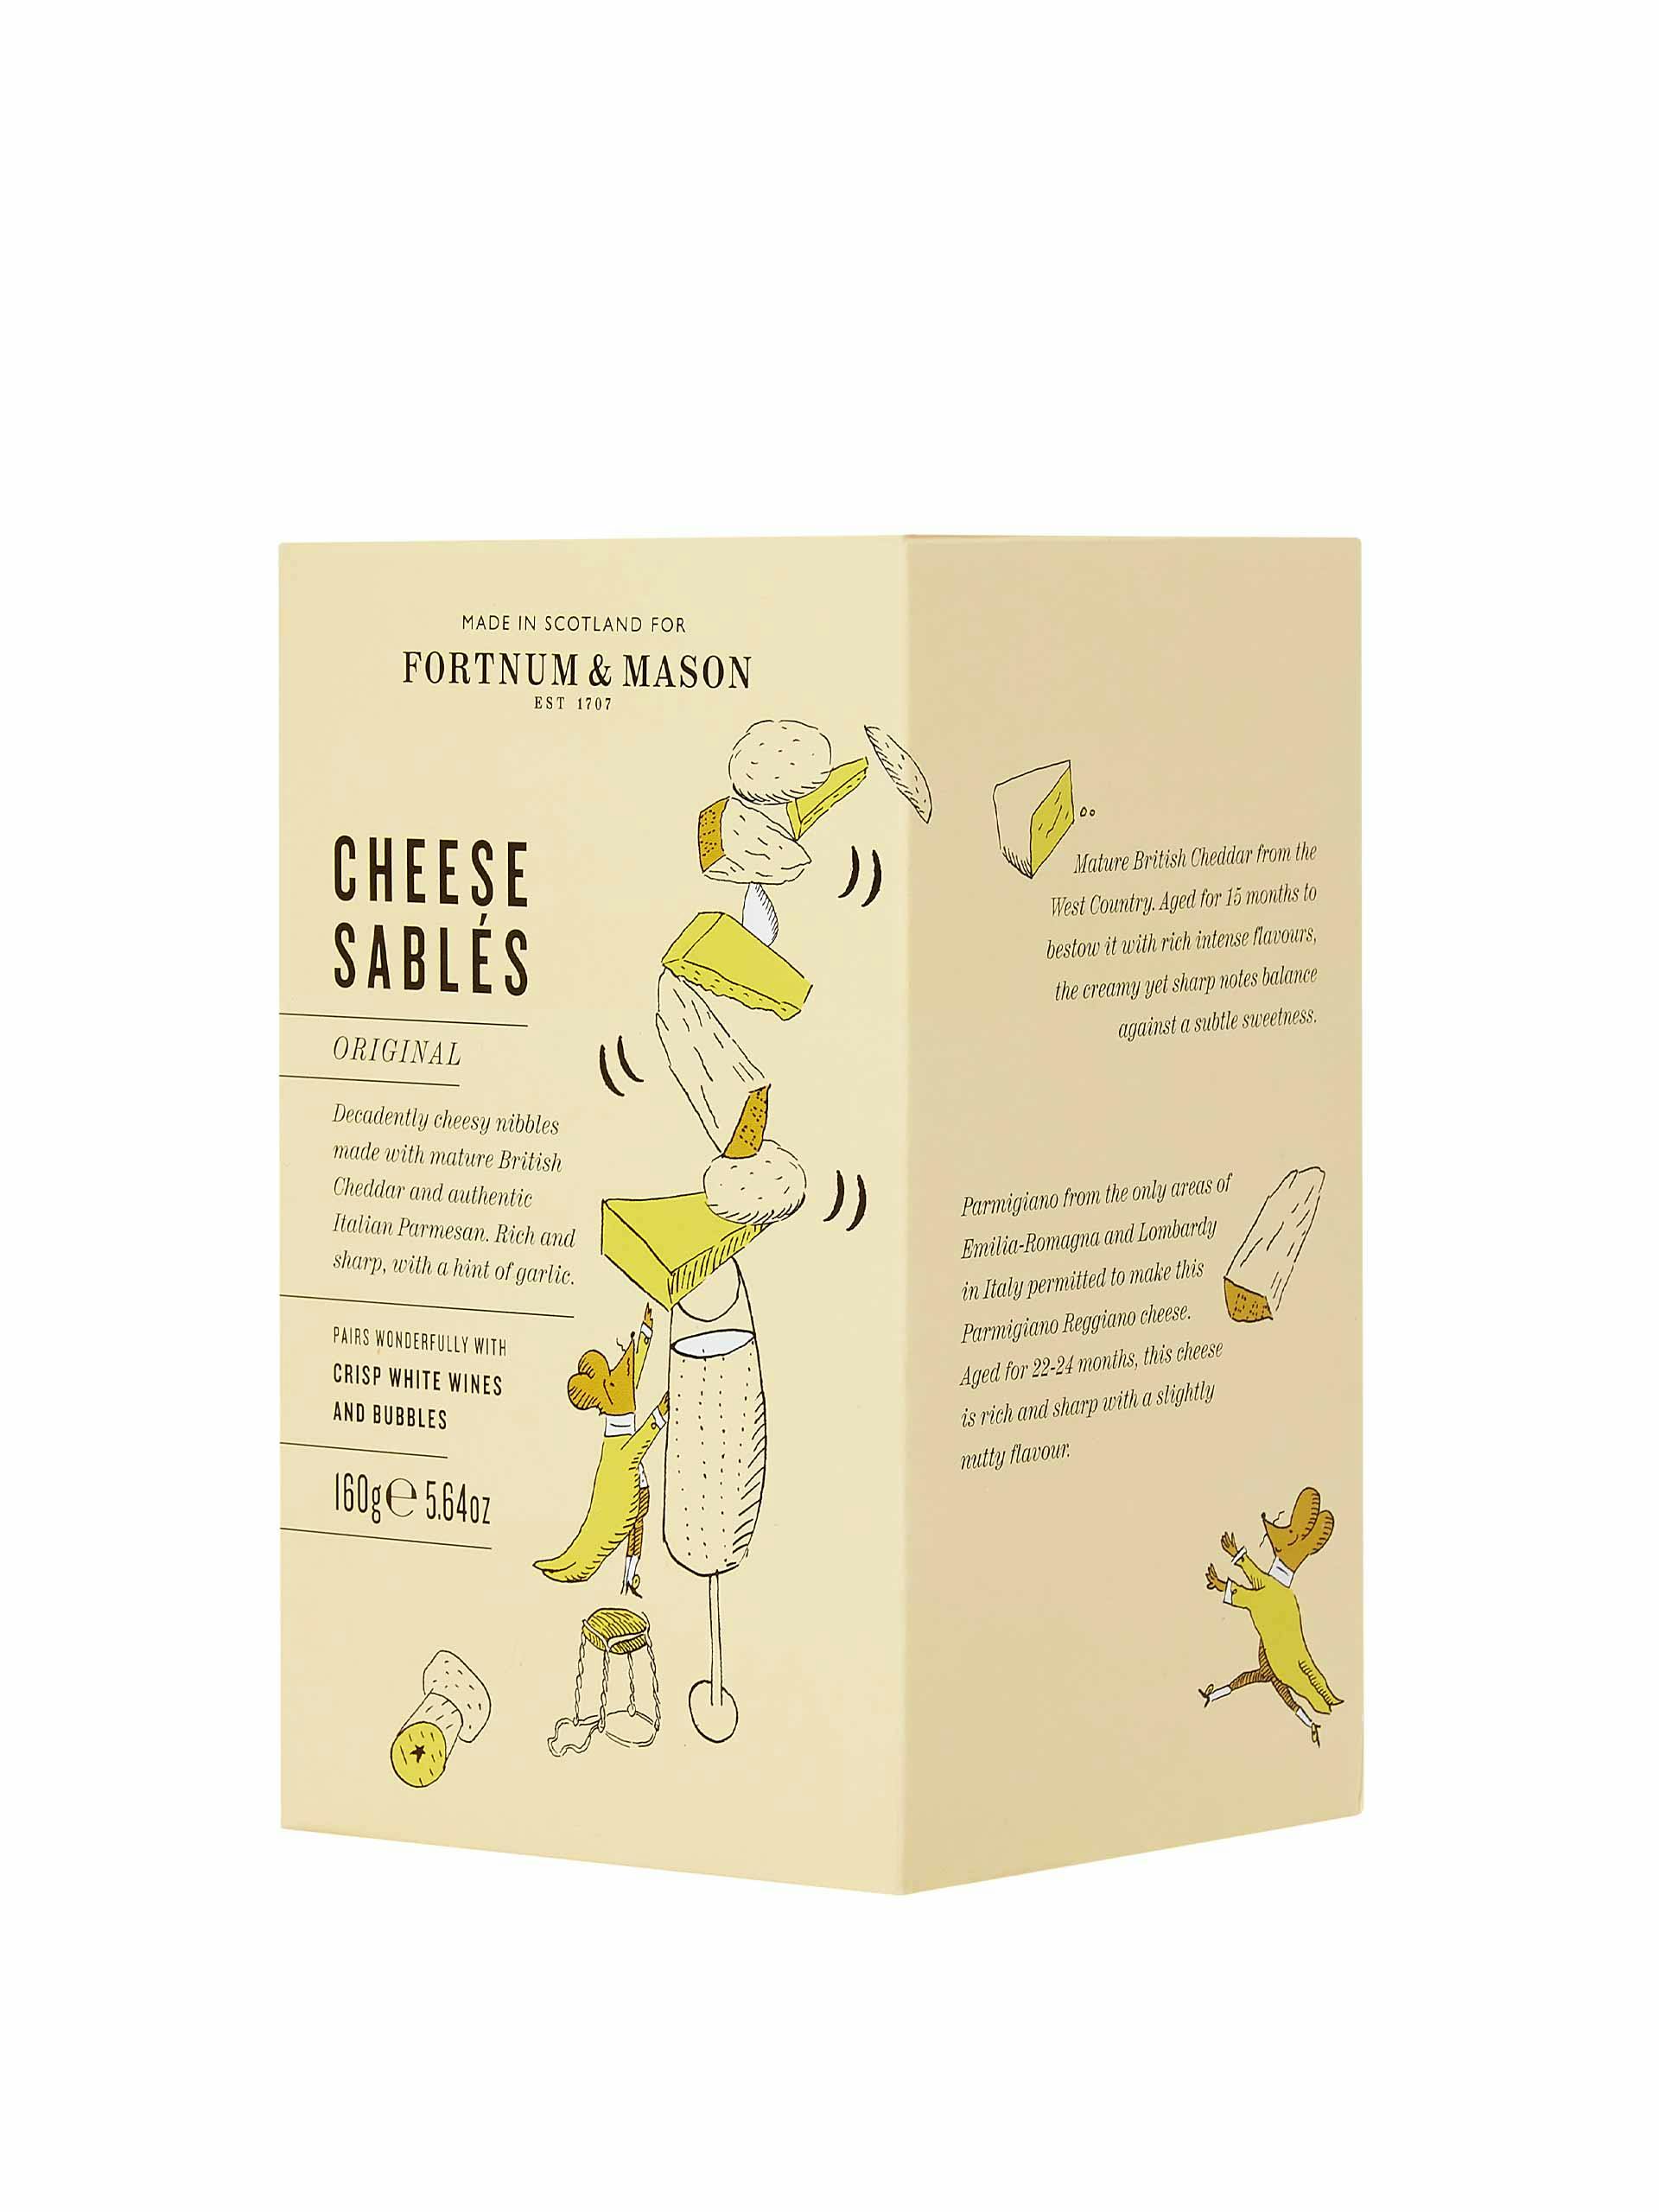 Original cheese sables